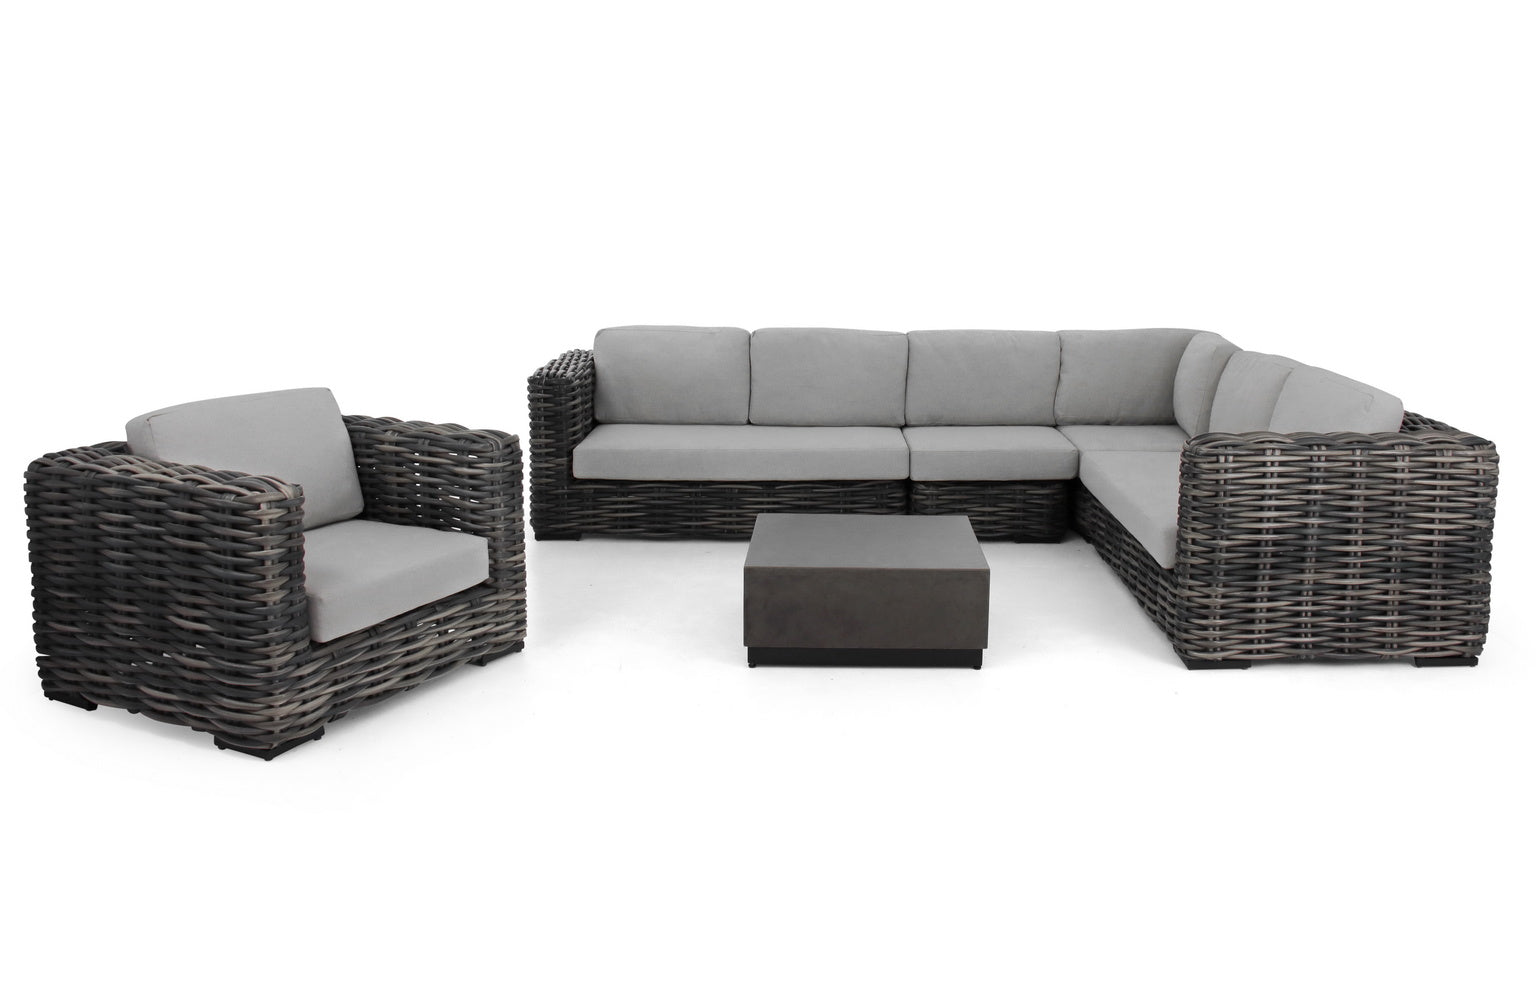 Alfresco Home Elements Sectional, Lounge Chair, & Ottoman at Jacobs Custom Living Spokane Valley WA, 99037